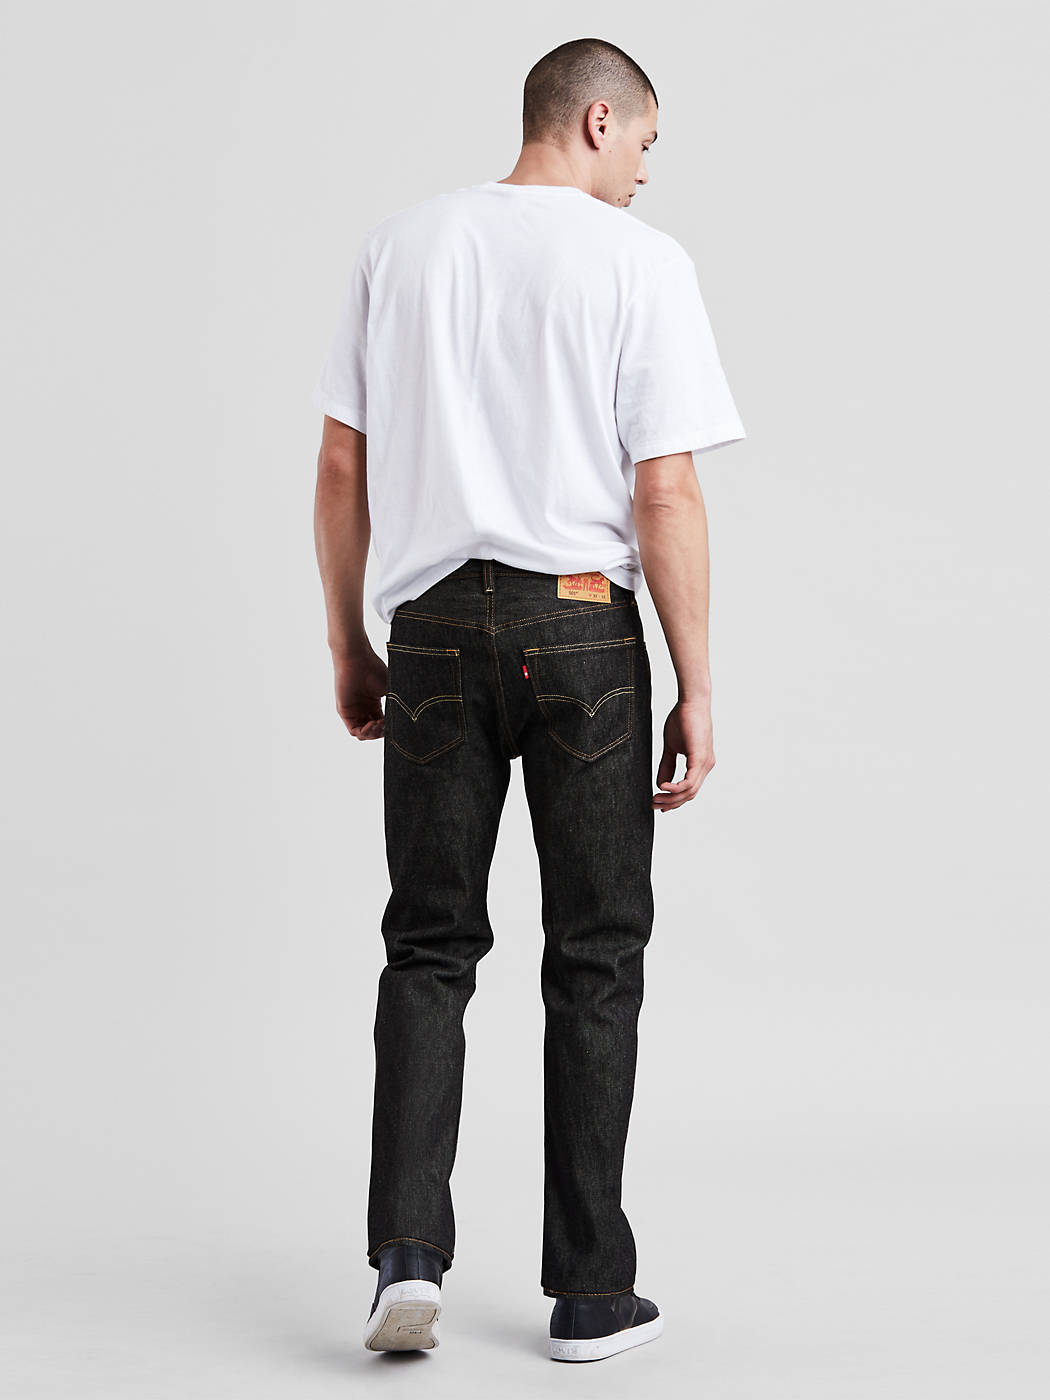 Levi's 501 ORIGINAL SHRINK-TO-FIT MEN'S JEANS -Black – Ascent Wear